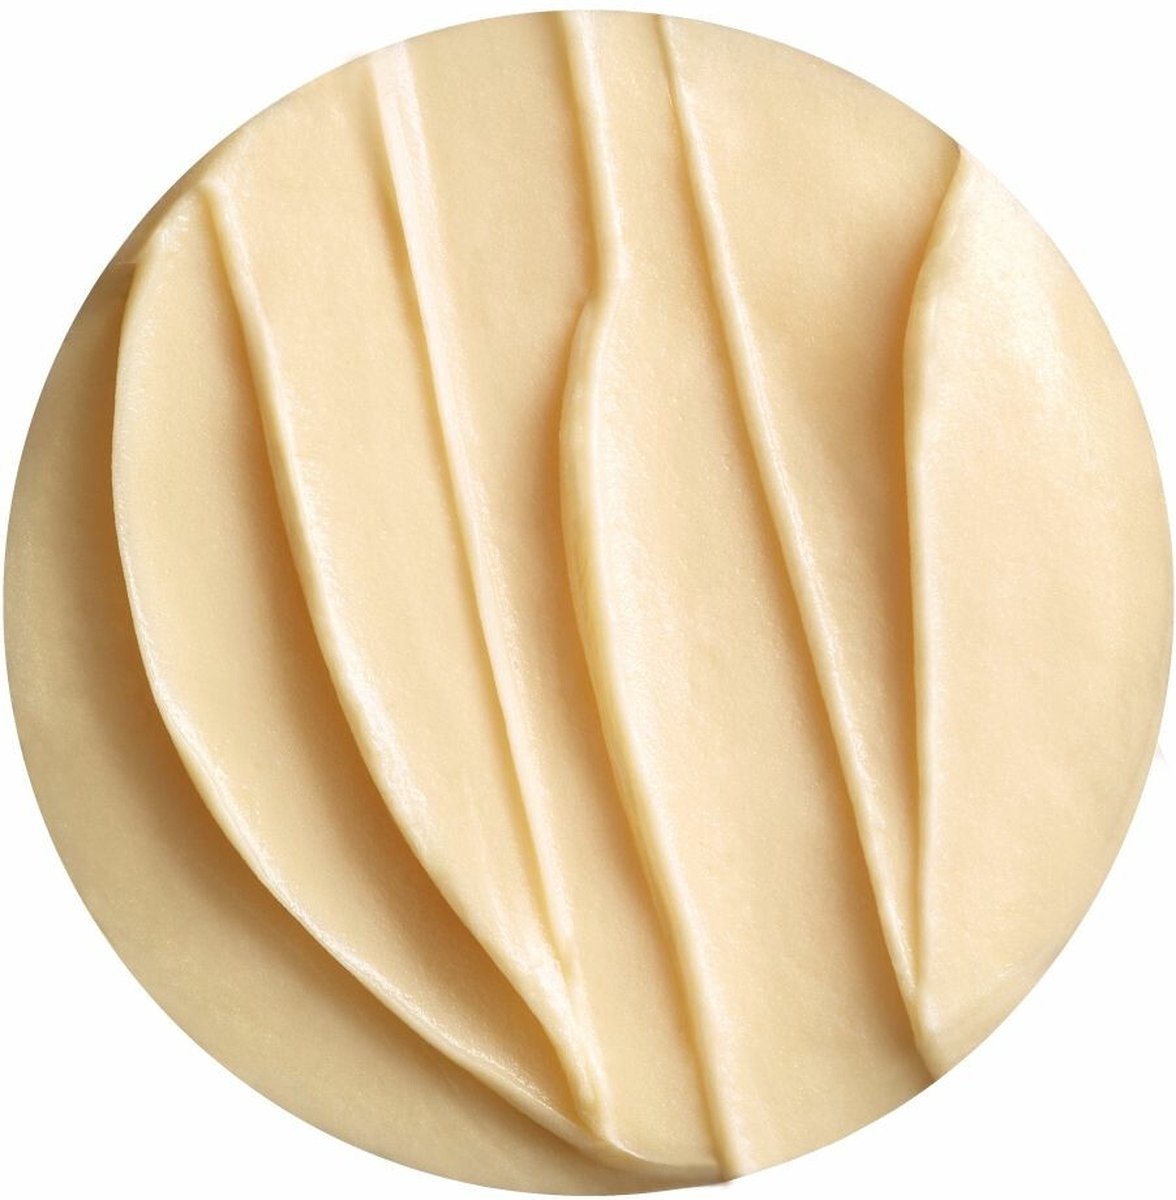 L'Oréal Paris Age Perfect Day Cream - 50 ml - Manuka Honey